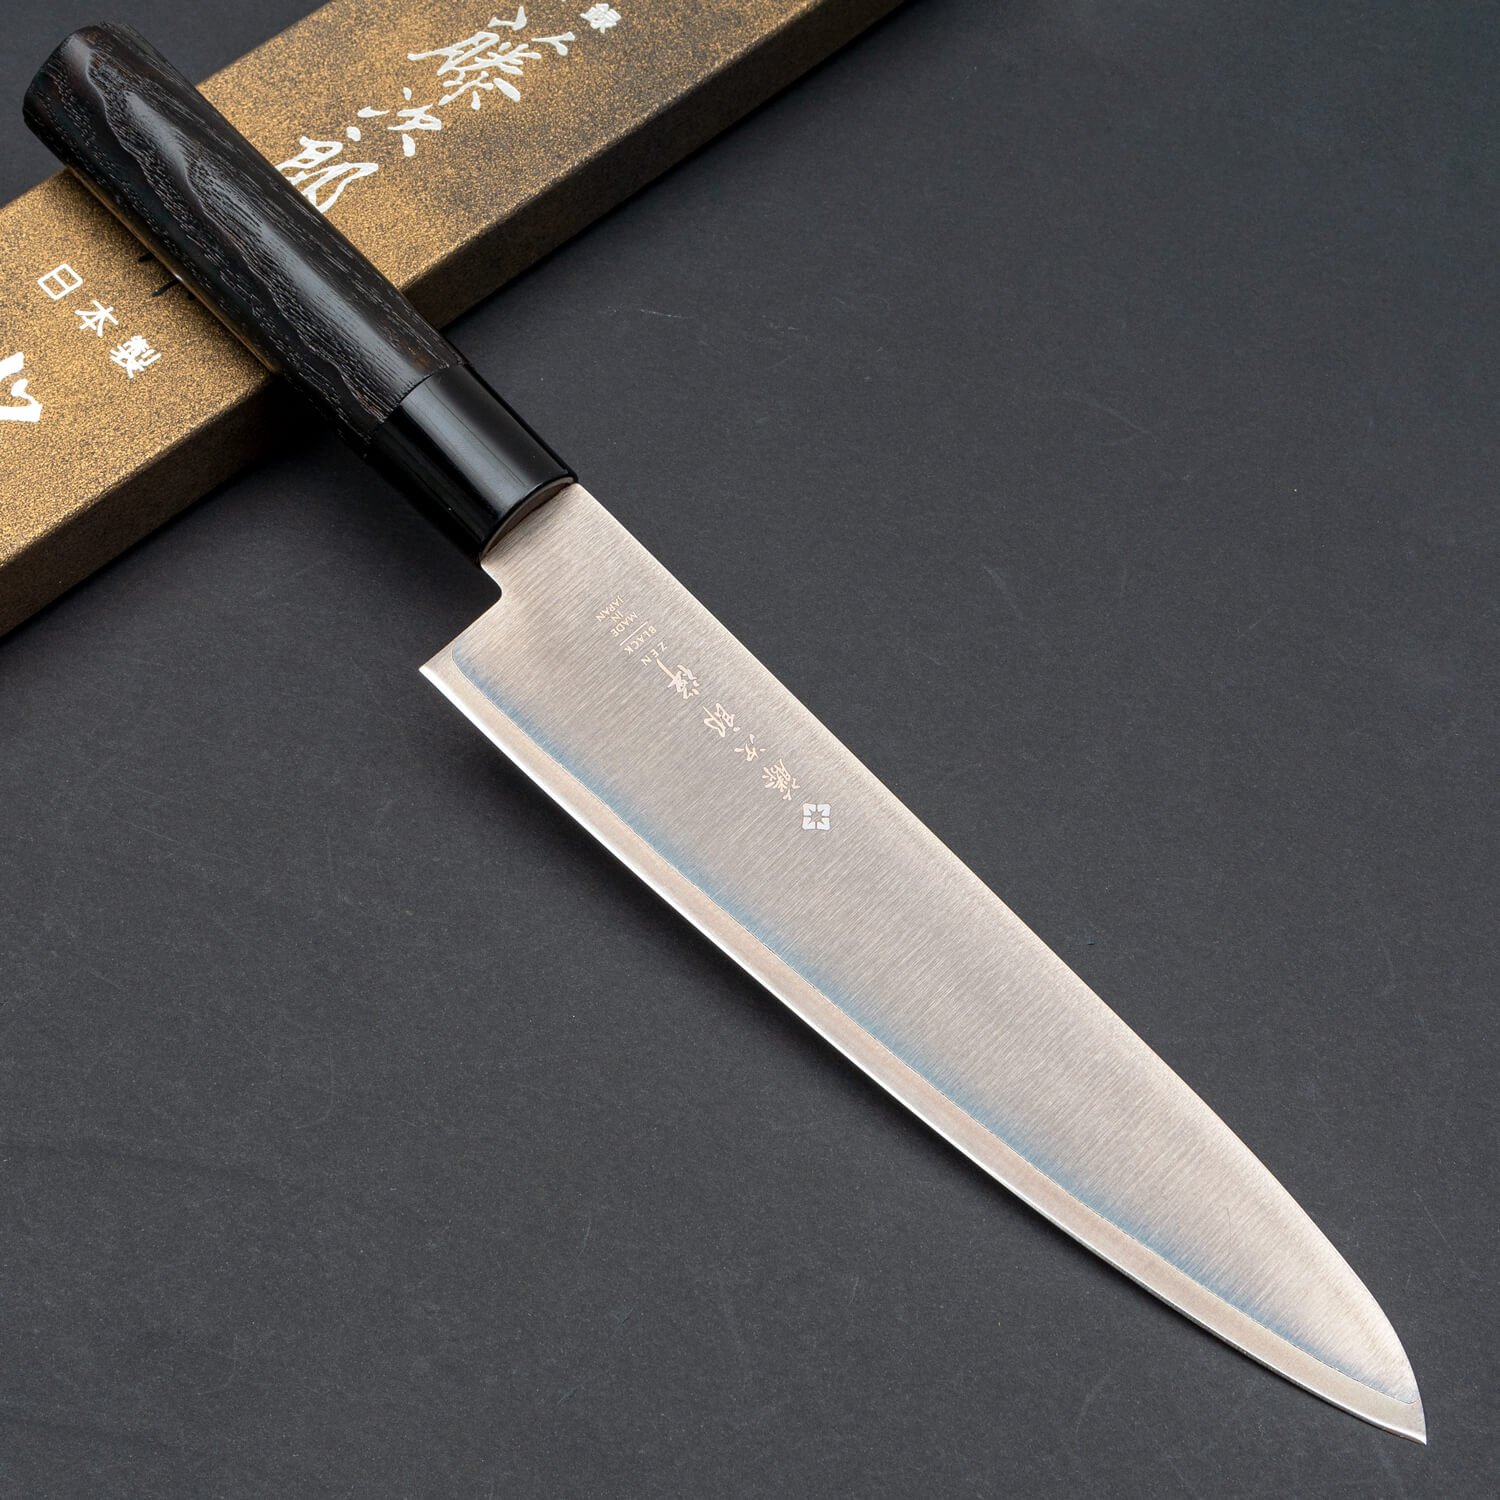 TOJIRO JAPAN » Blog Archive » TOJIRO ZEN BLACK Chef Knife 240mm